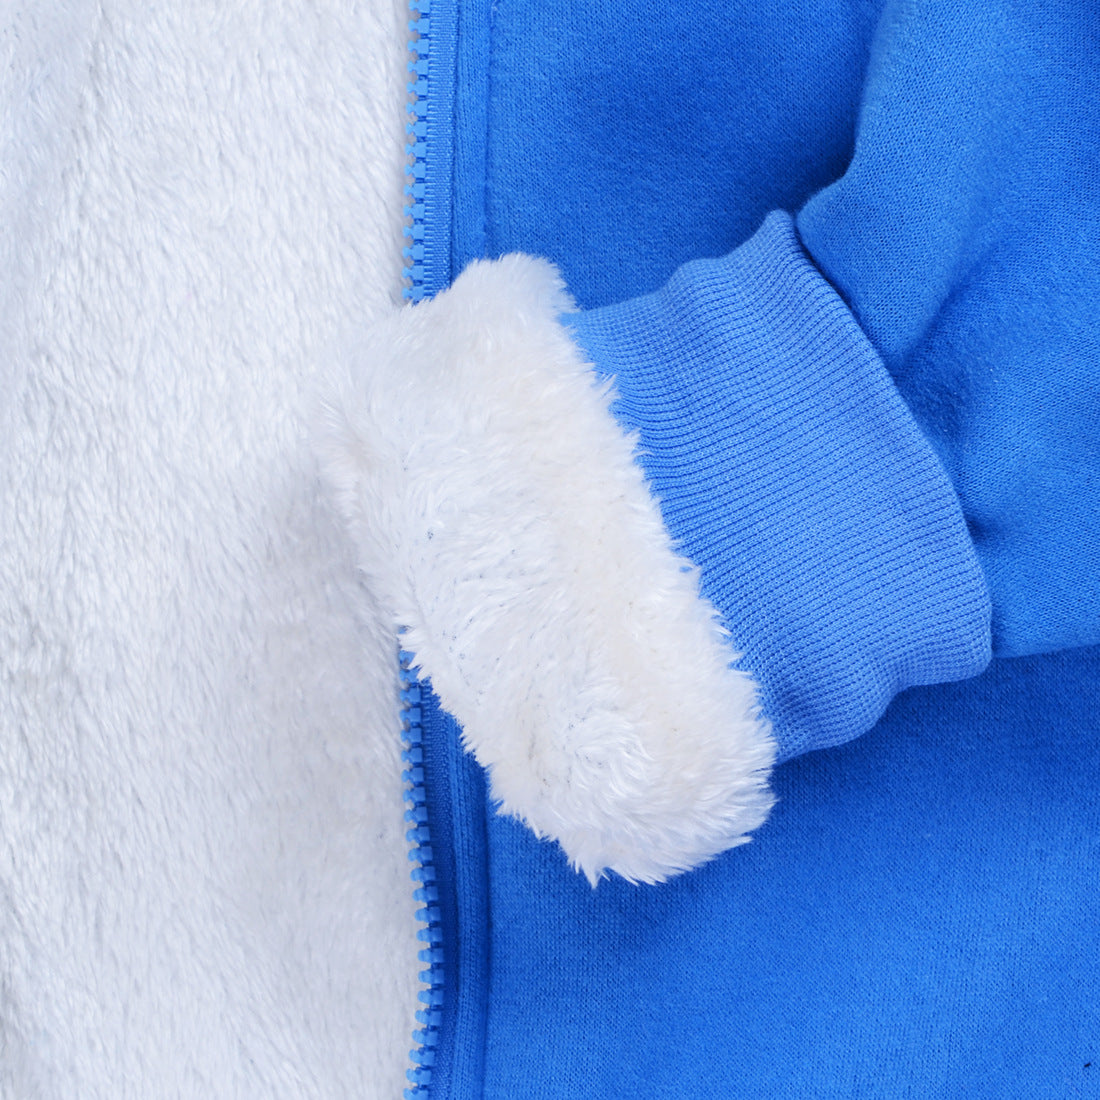 Trolls Pullover Hoodie Sweatshirt Autumn Winter Unisex Sweater Zipper Jacket for Kids Boy Girls